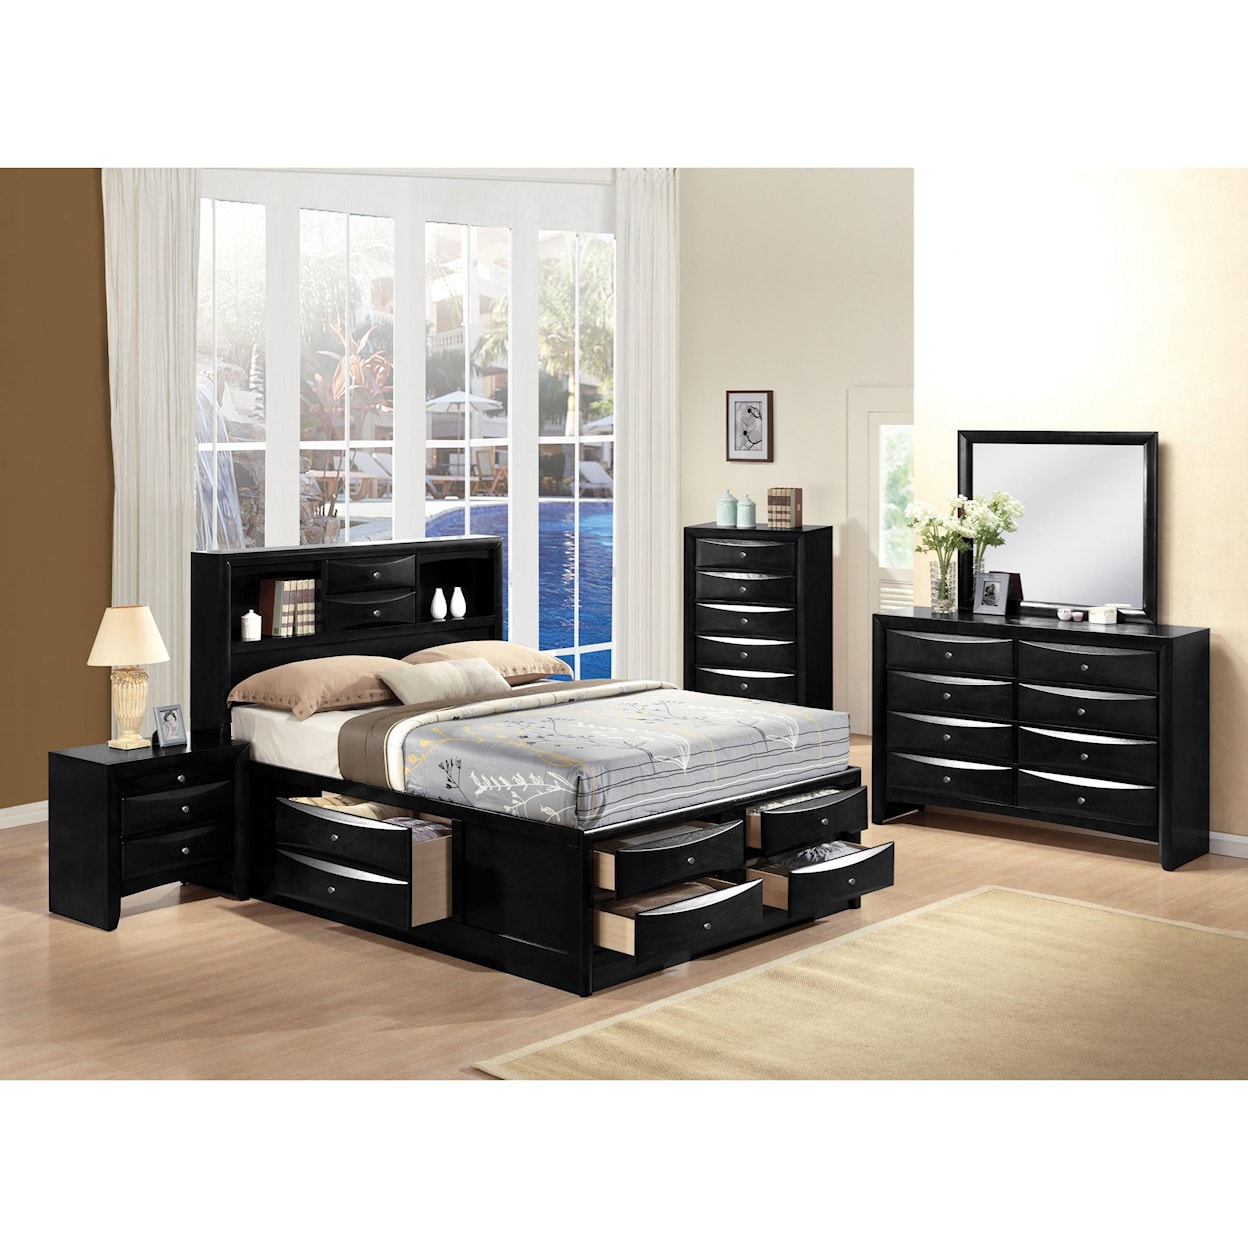 Acme Furniture Ireland Storage - Black Full Bed w/Storage